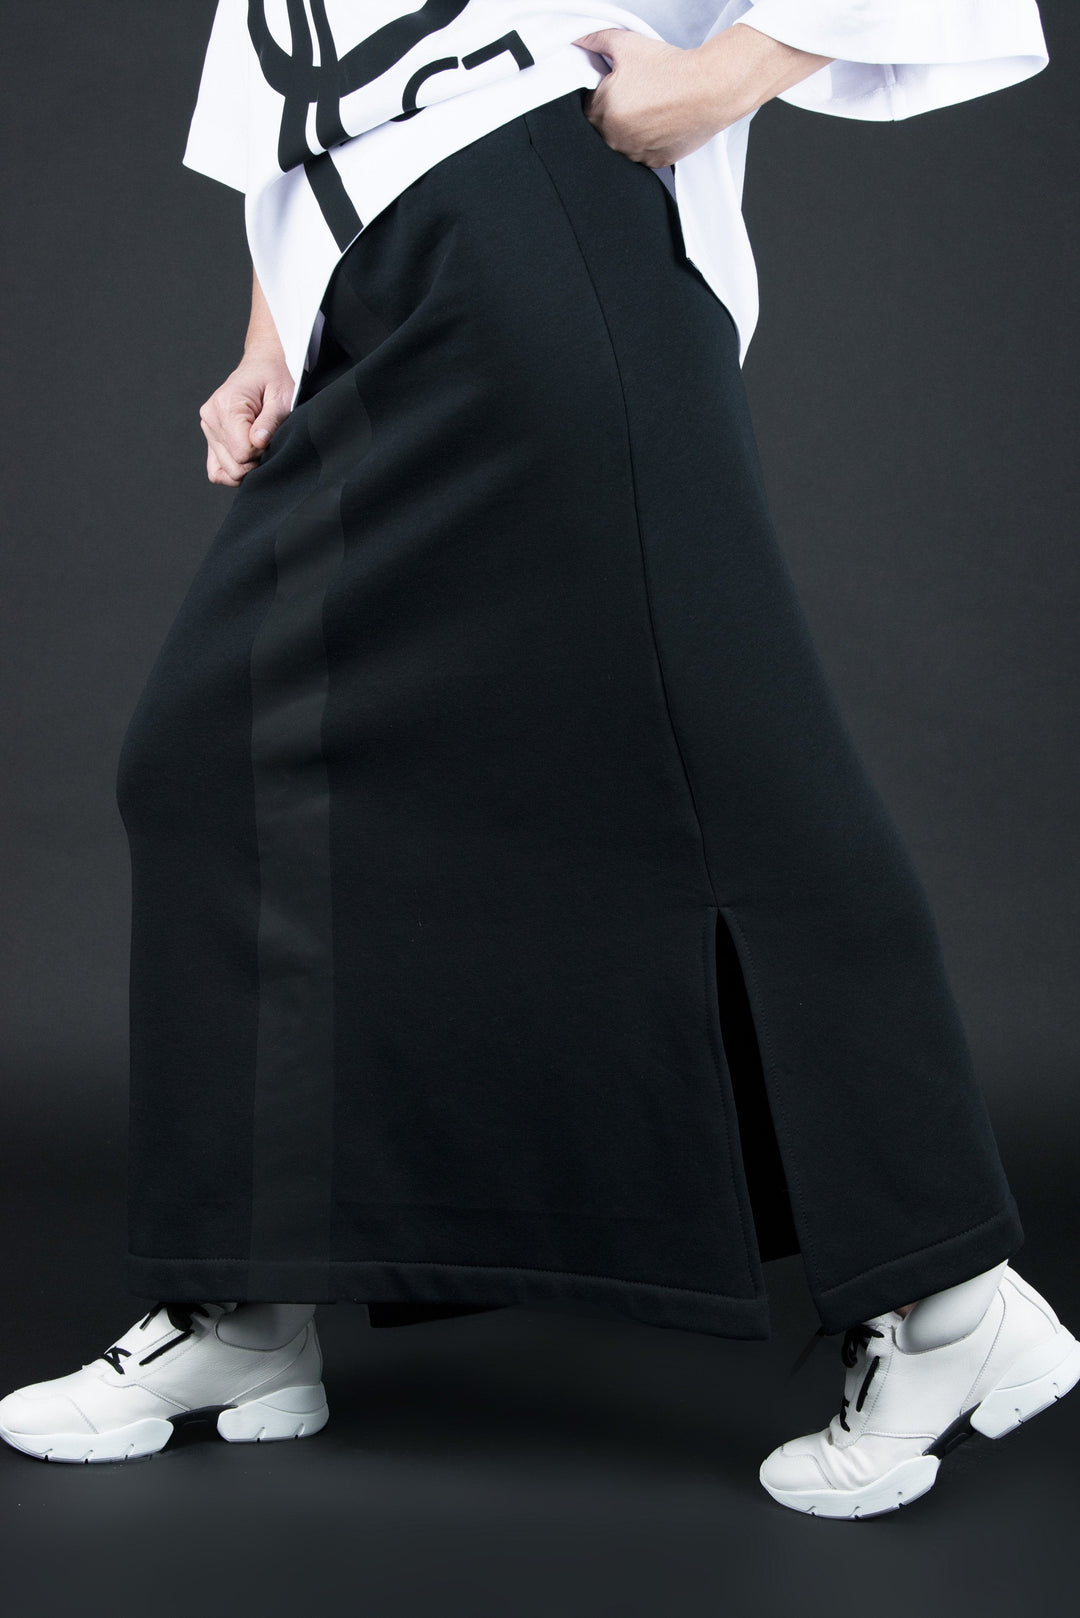 Black Cotton Maxi Sport Skirt, Skirts